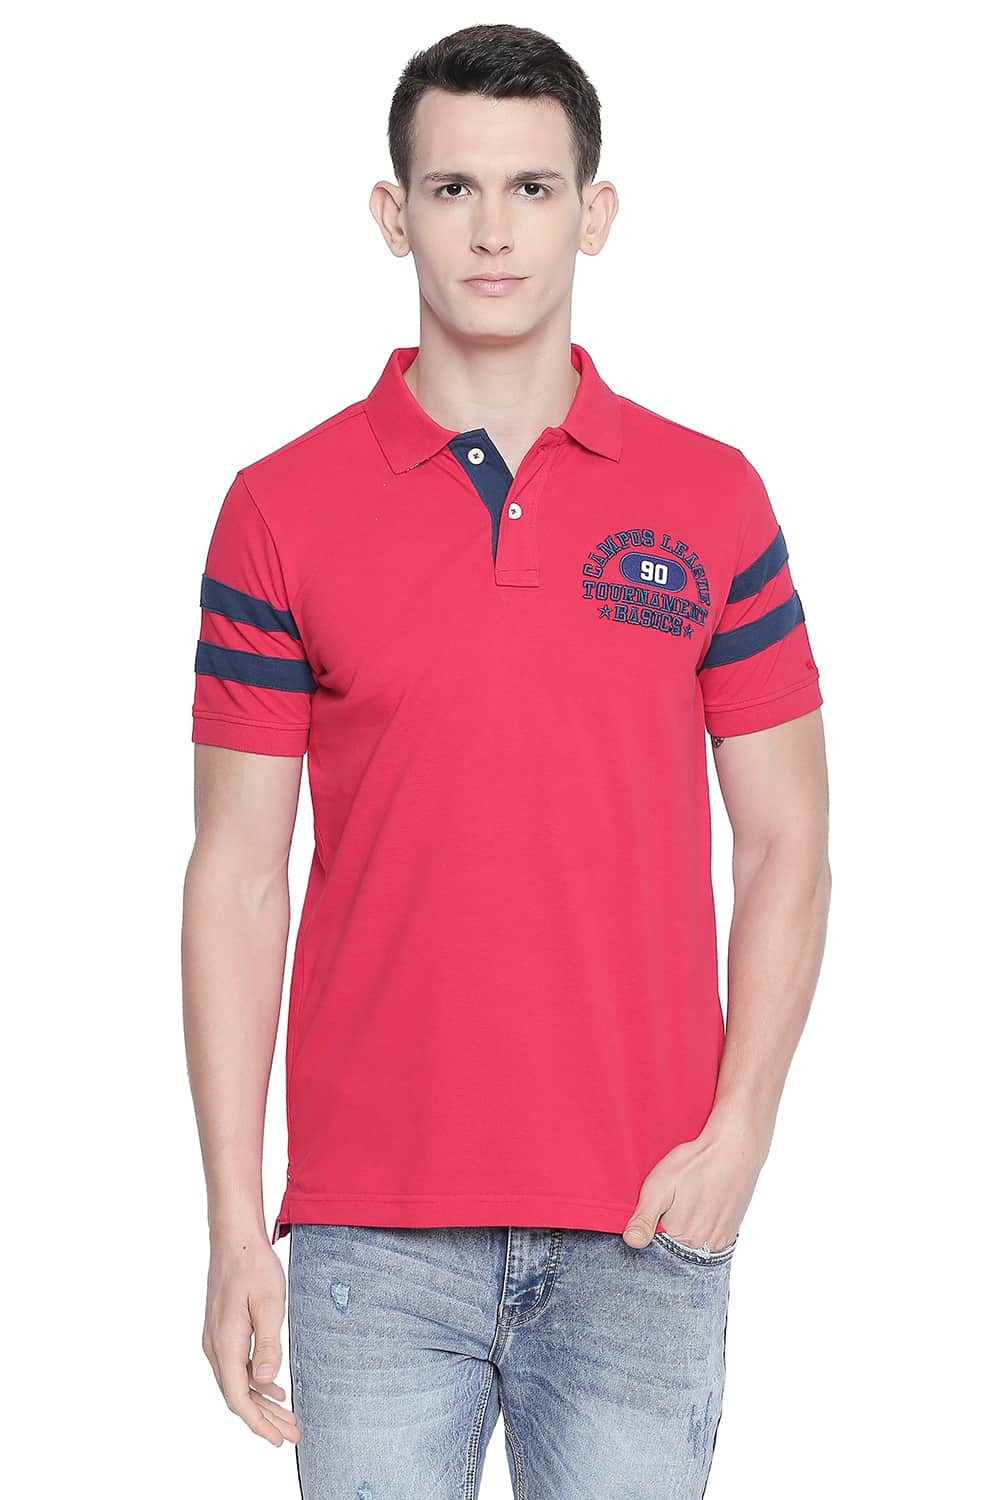 BASICS | Basics Muscle Fit Lollipop Red Polo T Shirt